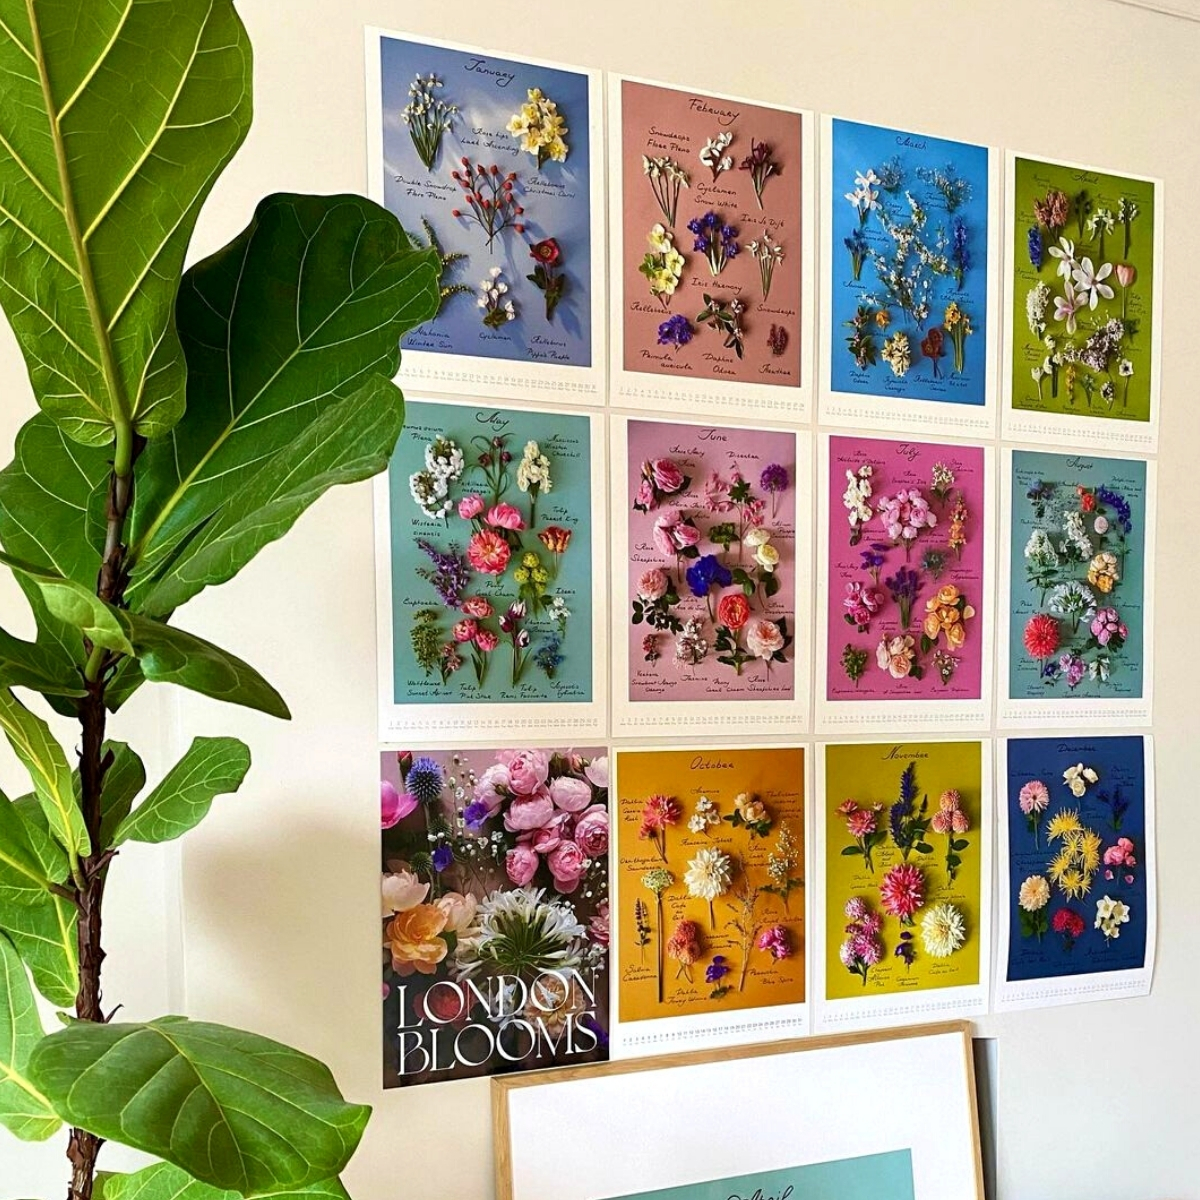 london-blooms-turns-her-garden-into-a-botanical-calendar-featured